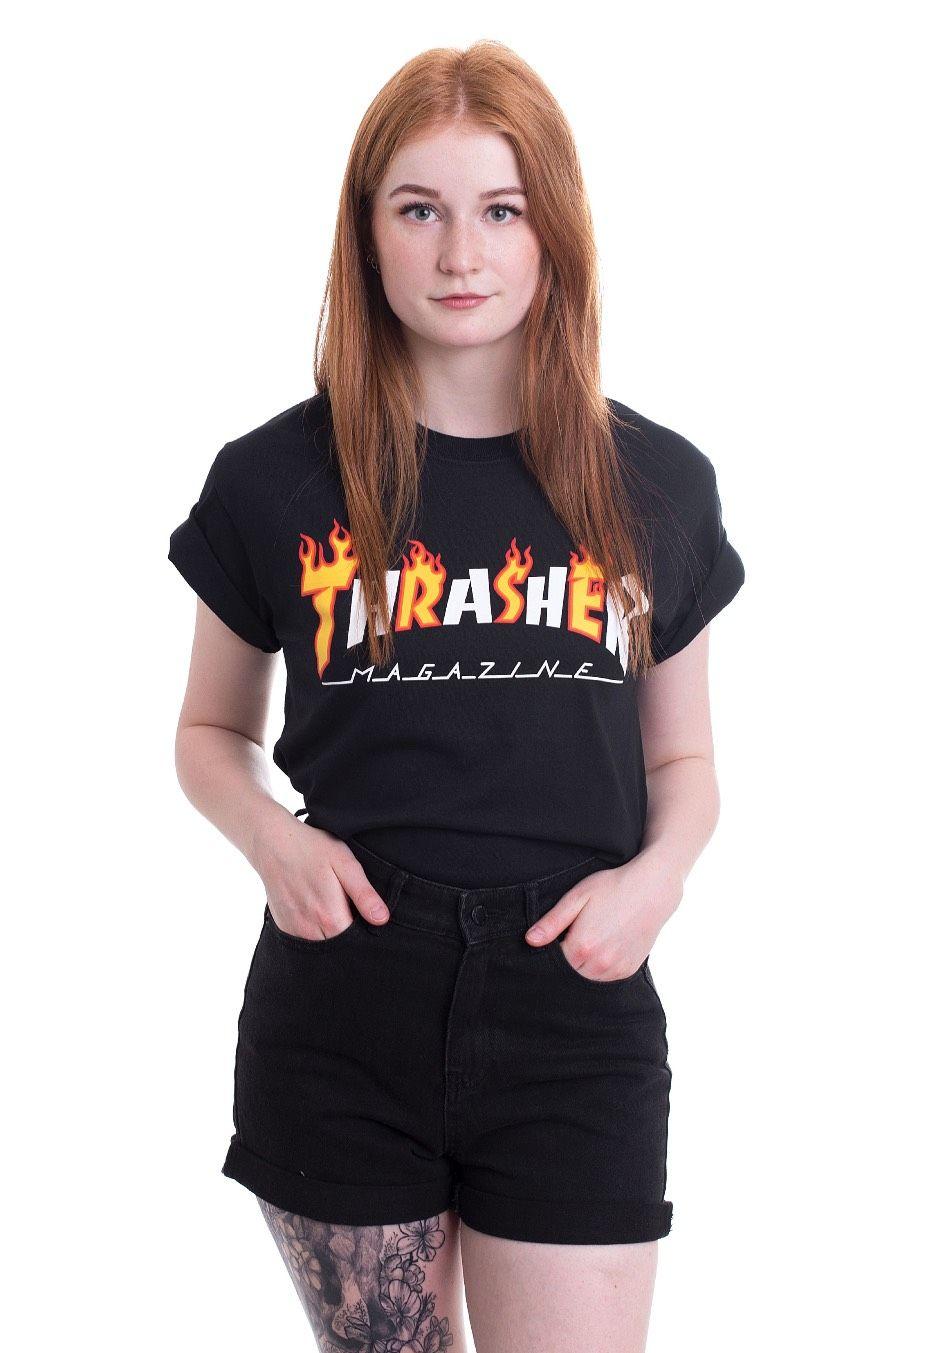 Girl Thrasher Logo - Thrasher - Thrasher Flame Mag Black - T-Shirt - Streetwear Shop ...